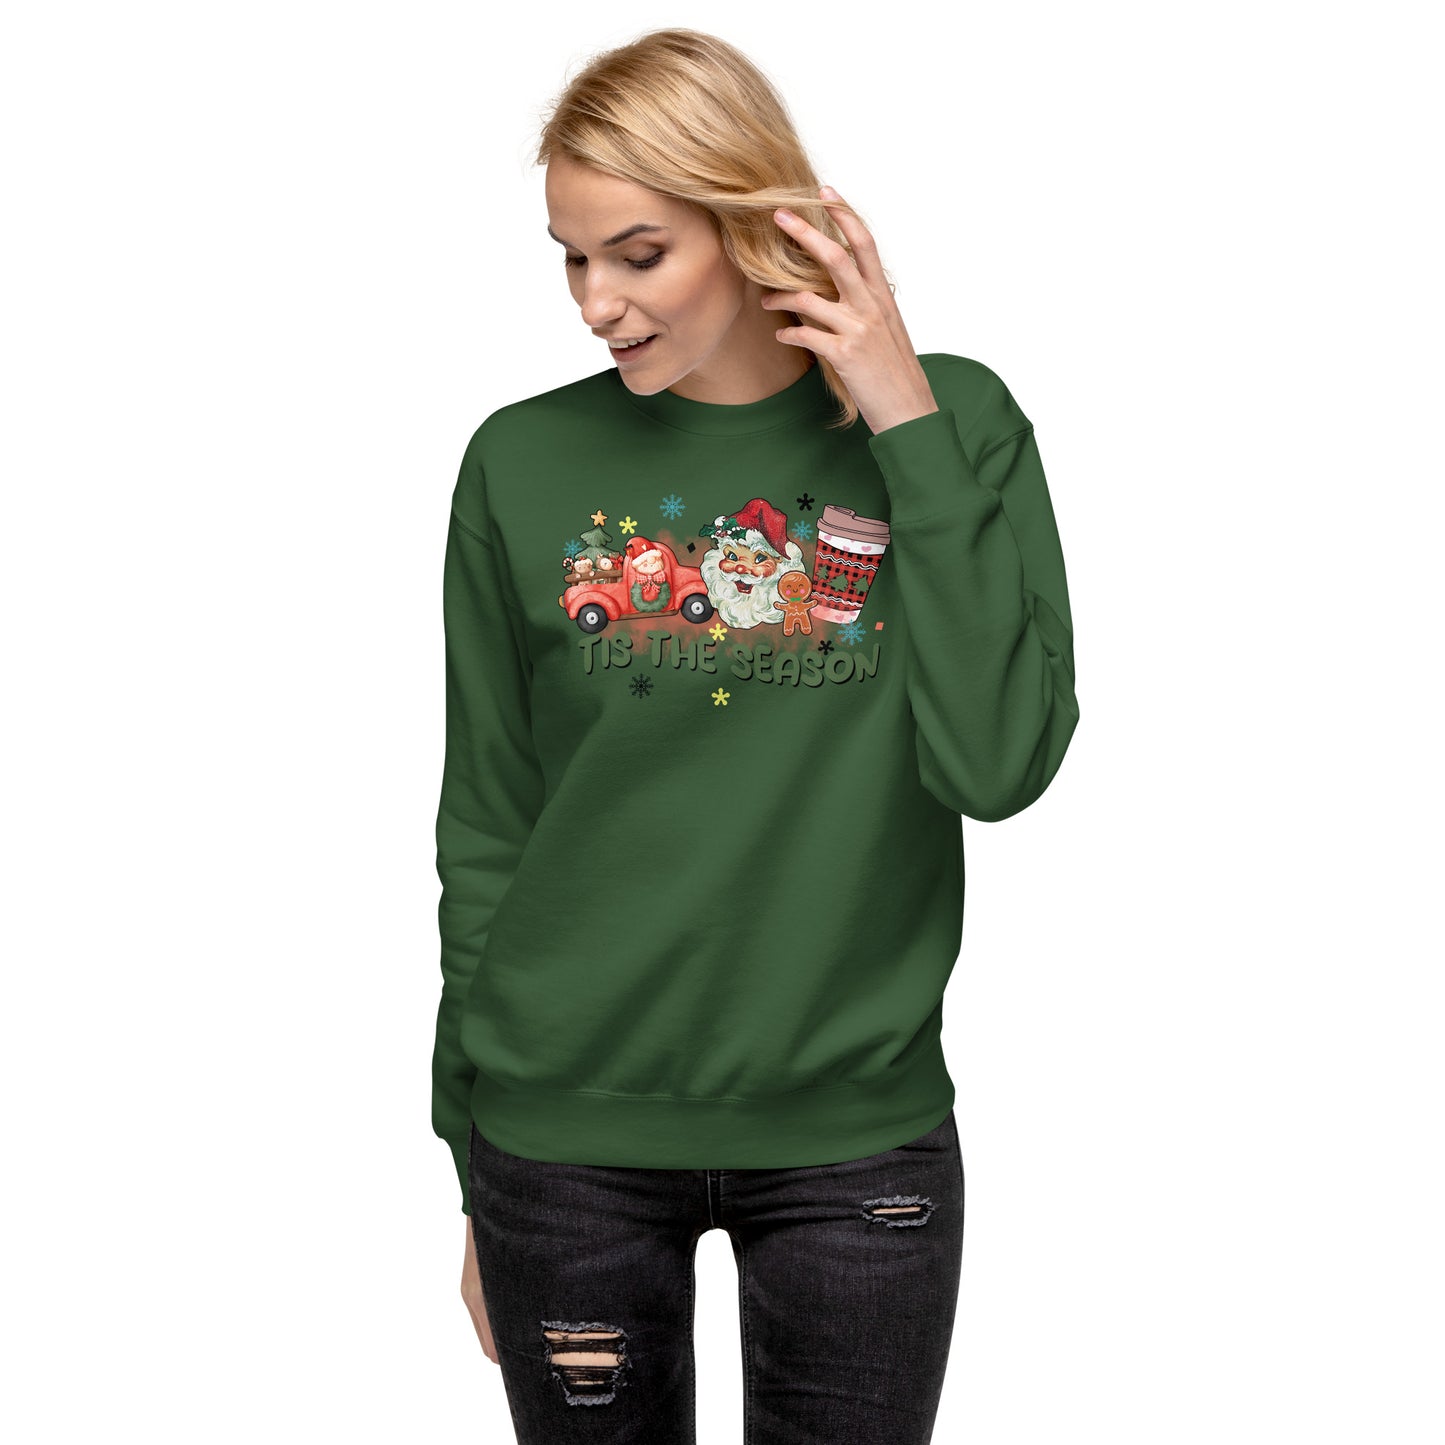 Antique Tis the Season Style Christmas Holiday Unisex Premium Sweatshirt